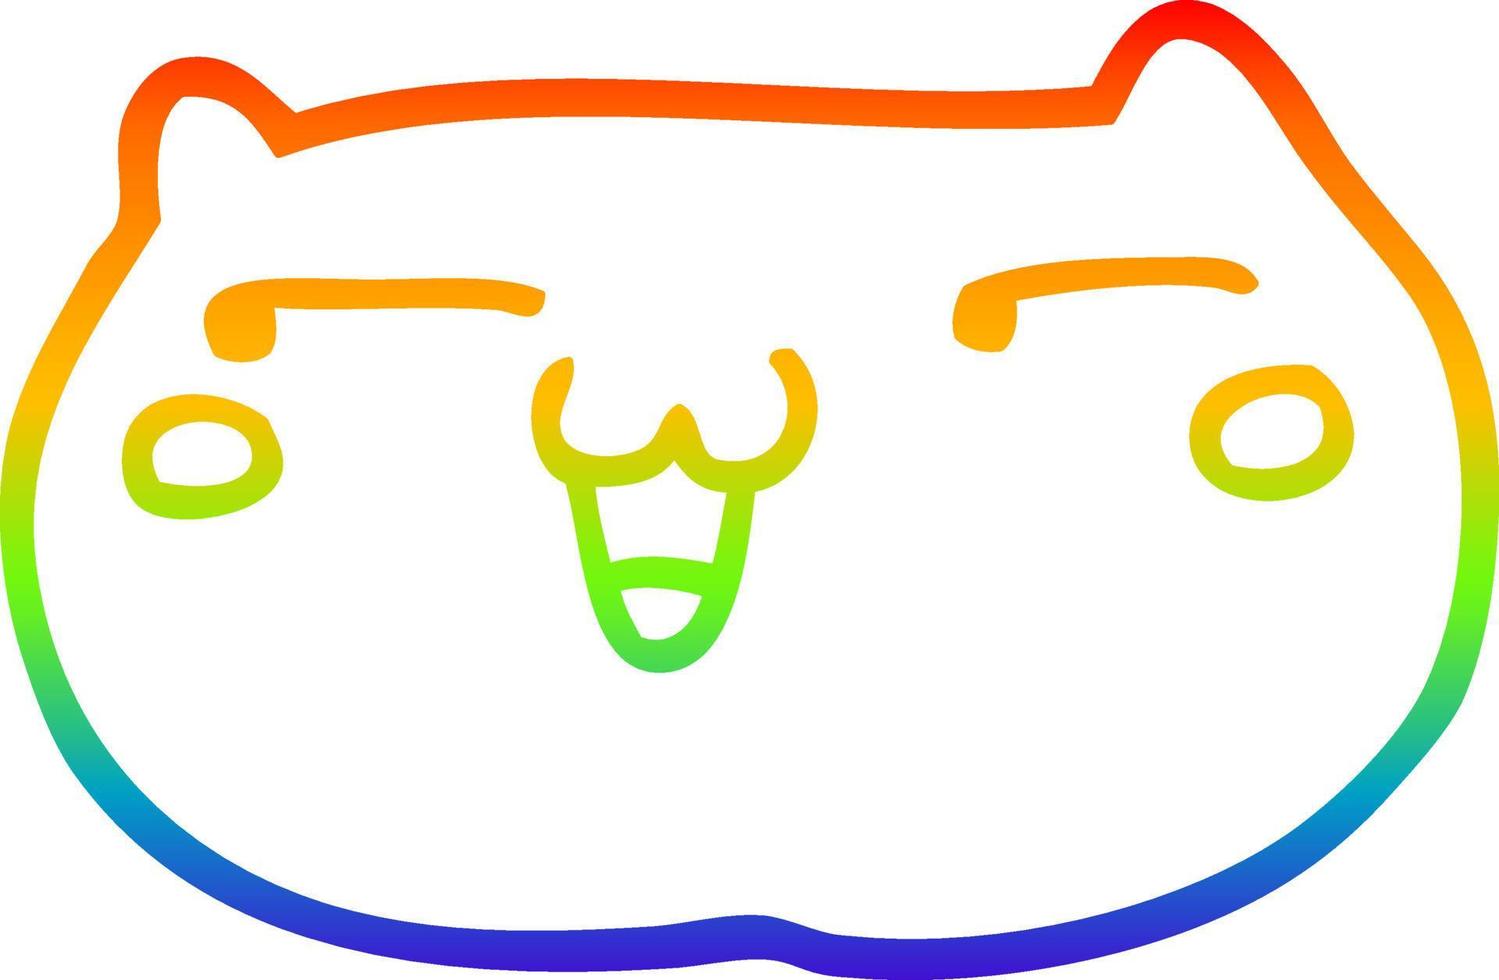 regenbooggradiënt lijntekening cartoon kat gezicht vector